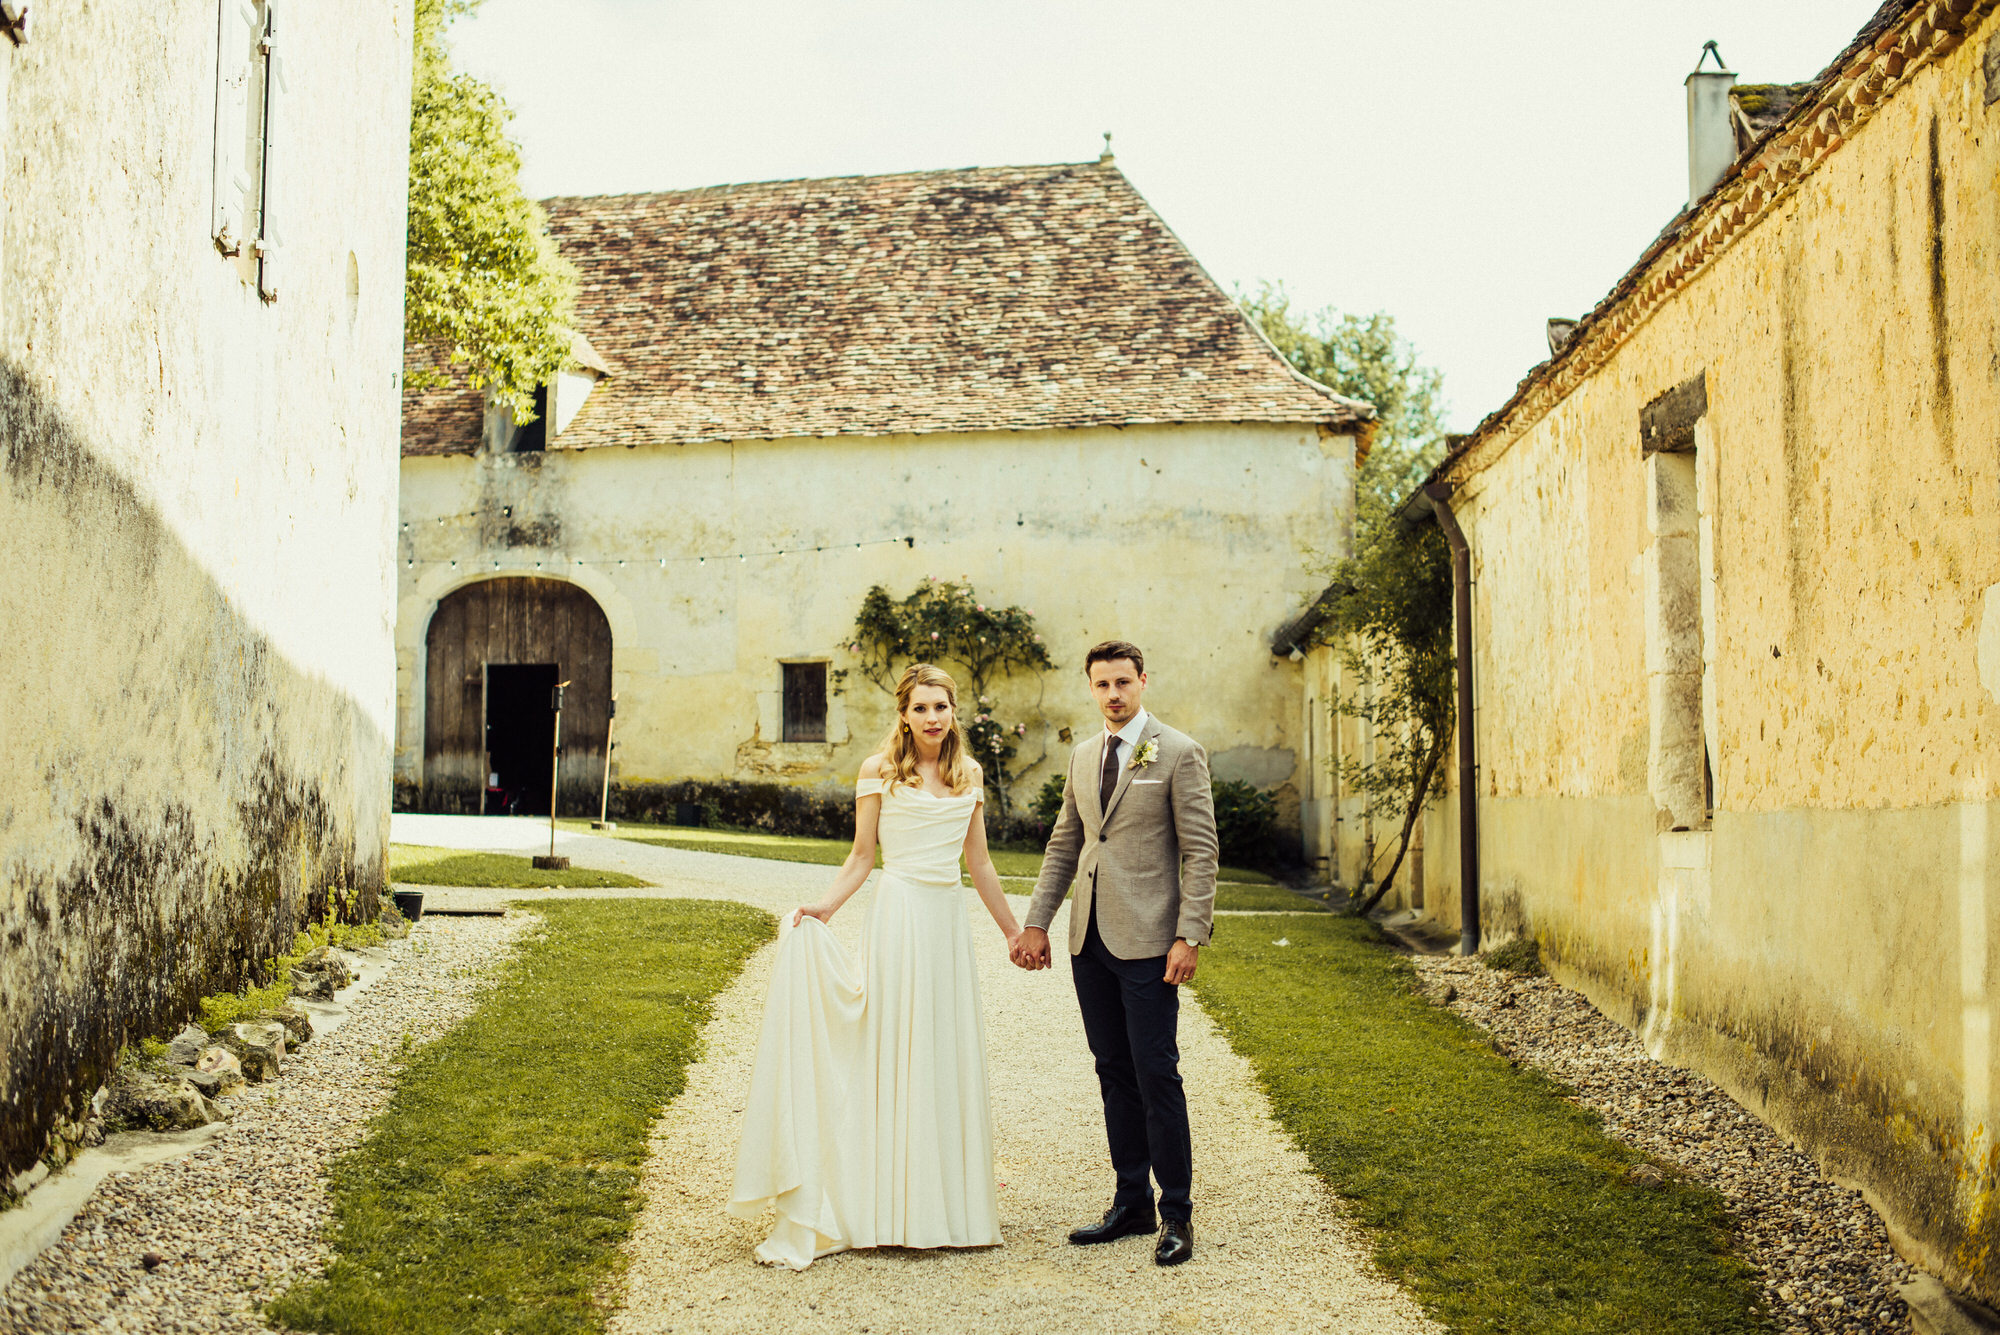 corseted wedding dress, french wedding, destination wedding photography, la leotard wedding